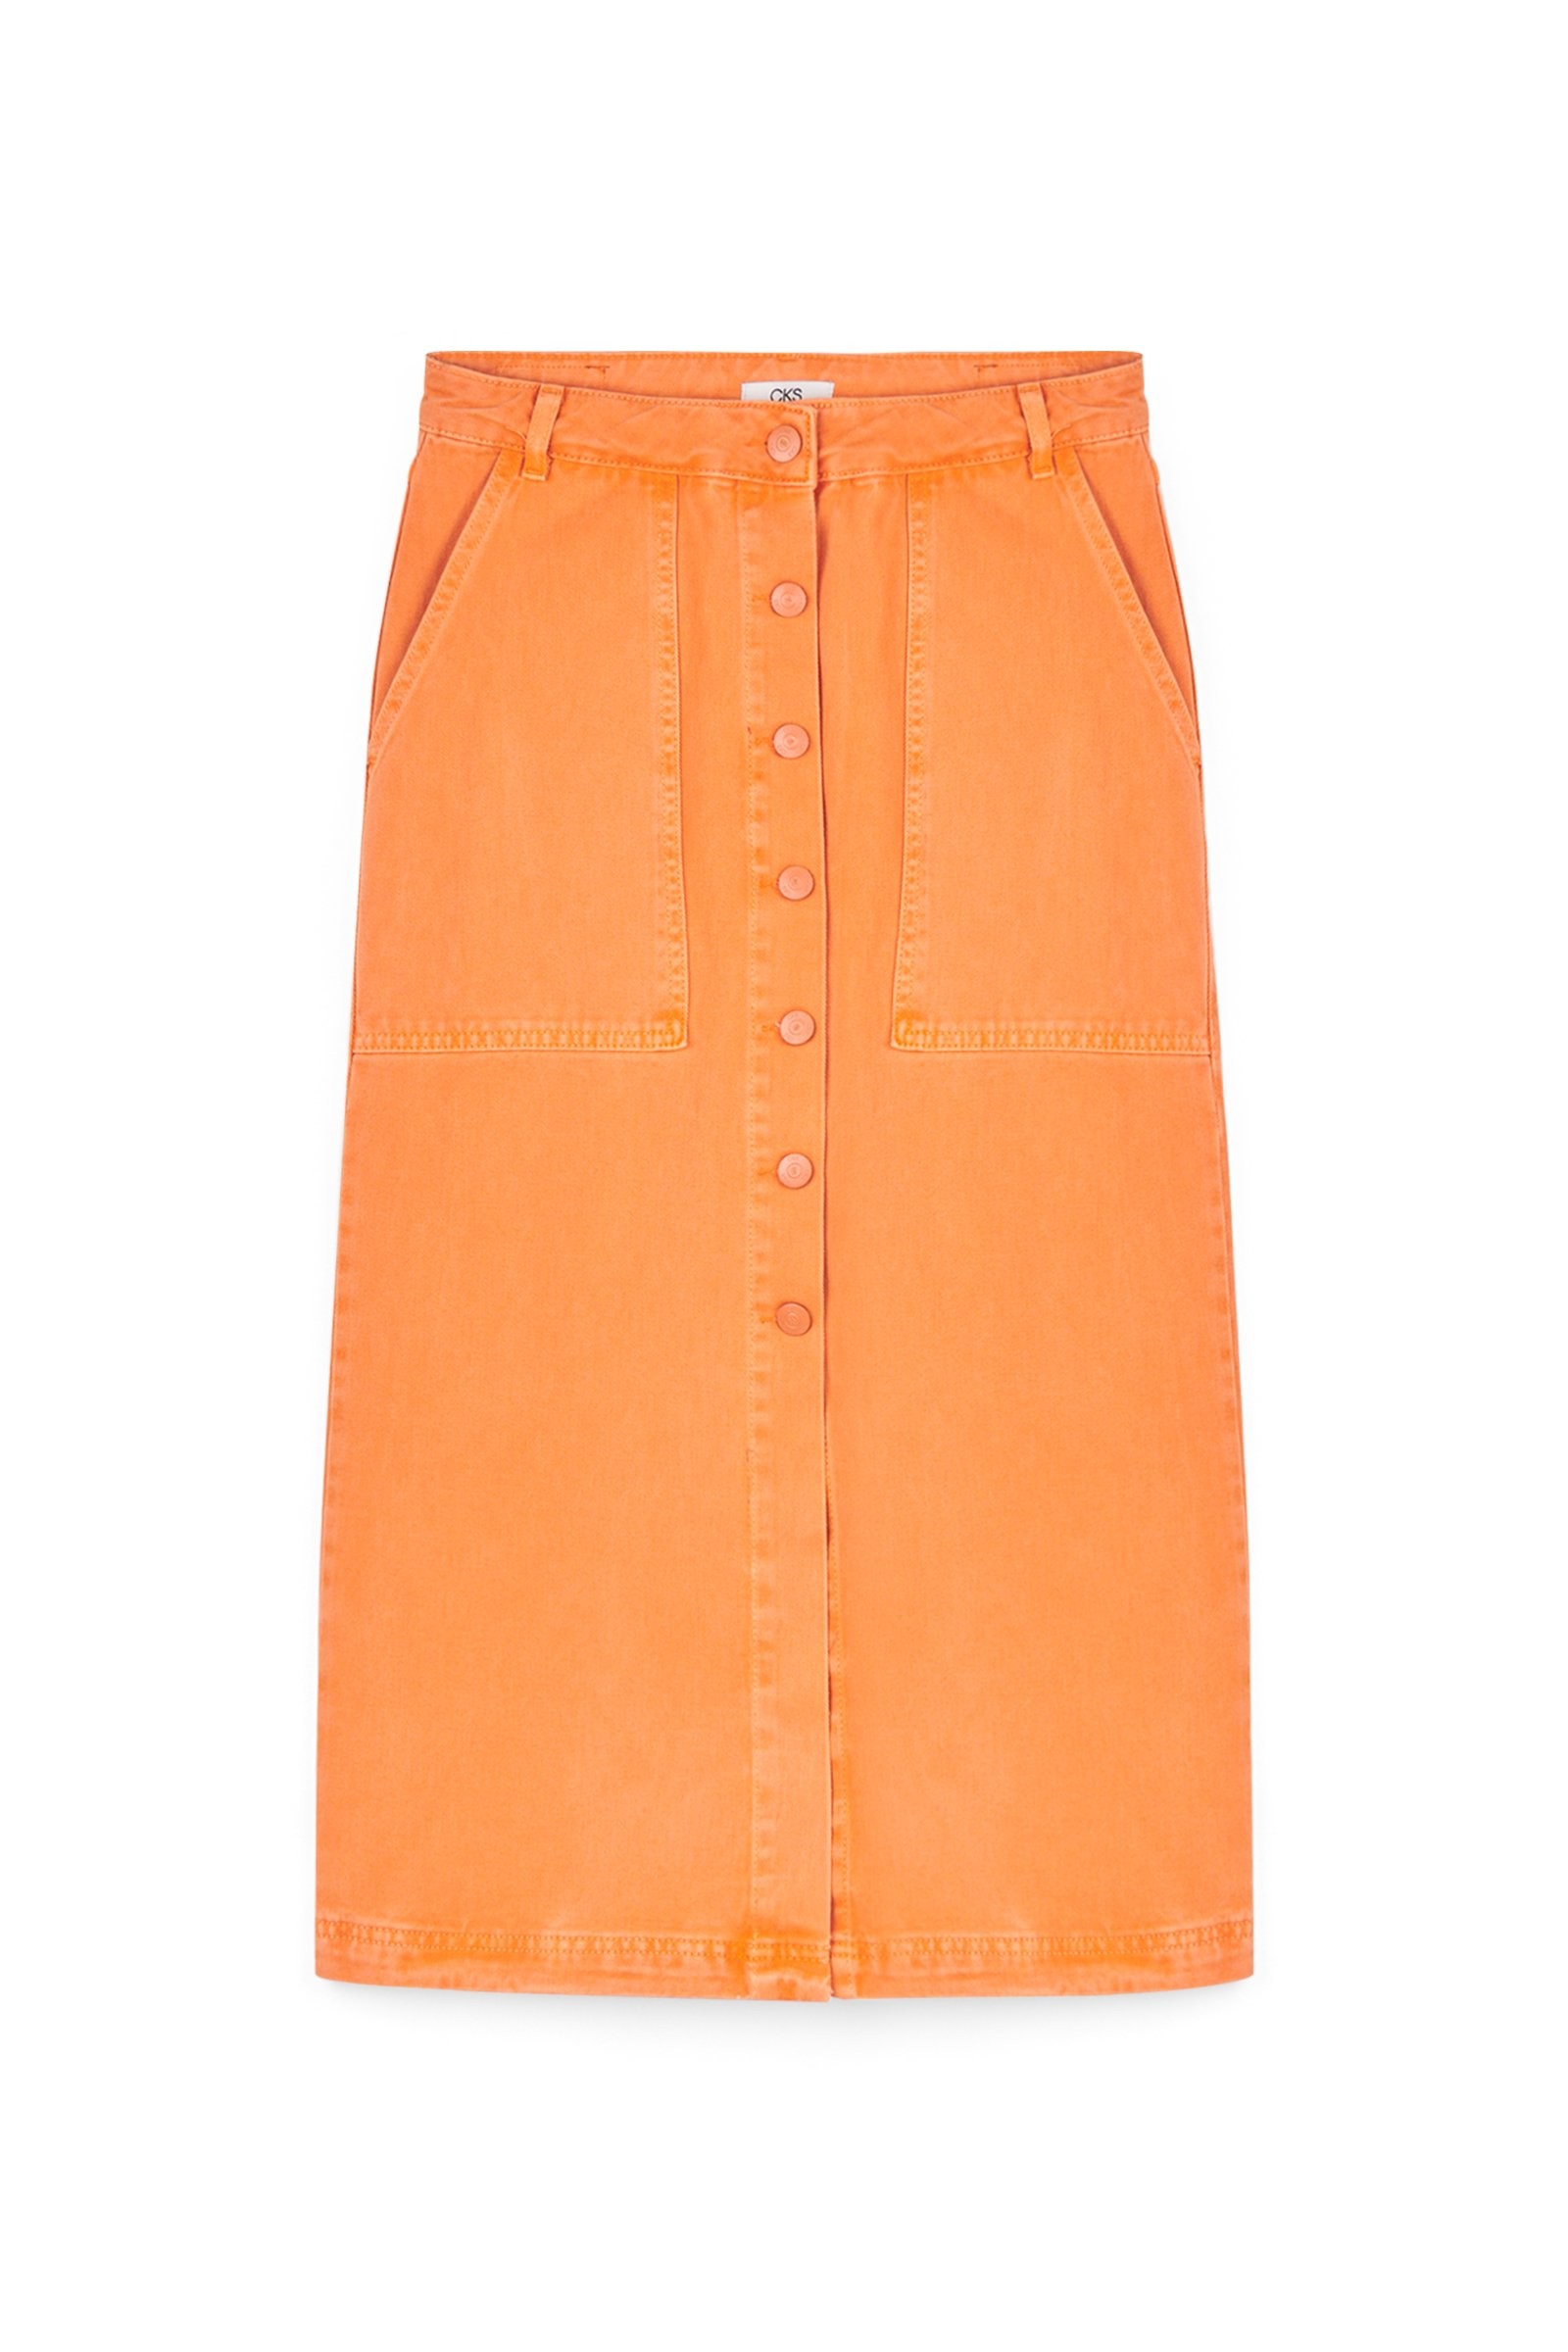 CKS Dames - FANTASIE - jupe longue - orange foncé